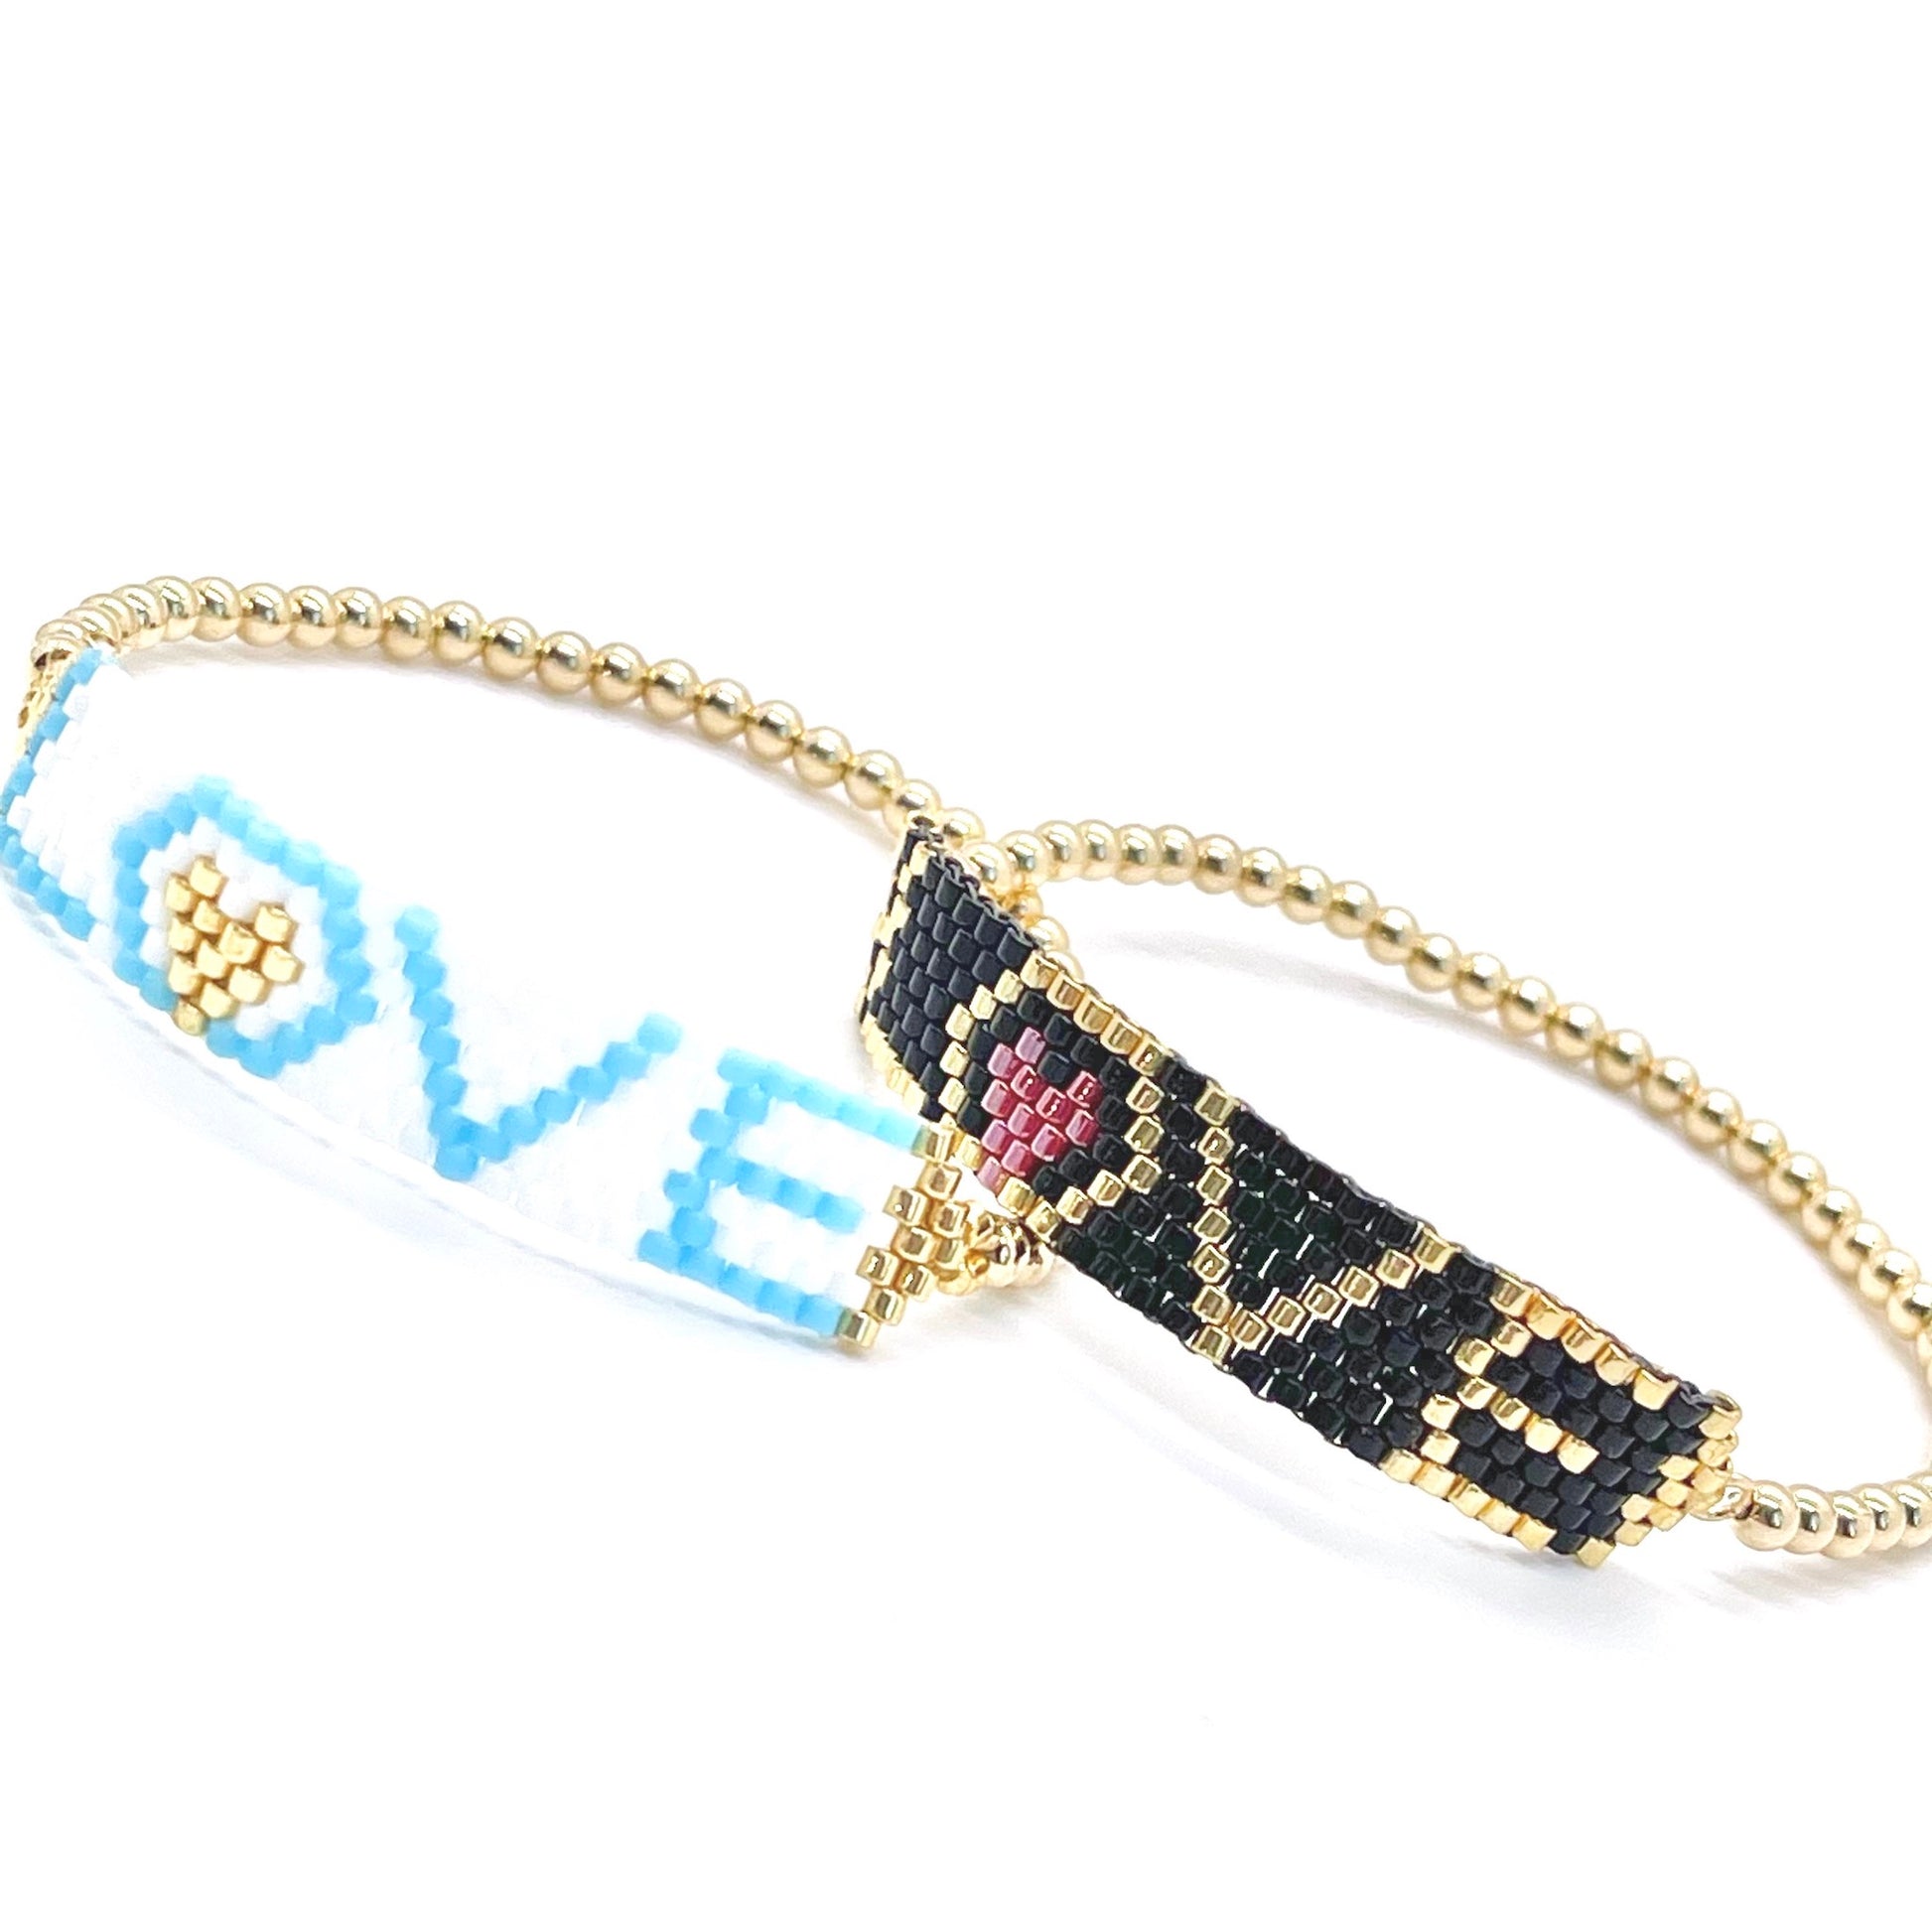 LOVE Bracelet - Navy and Gold